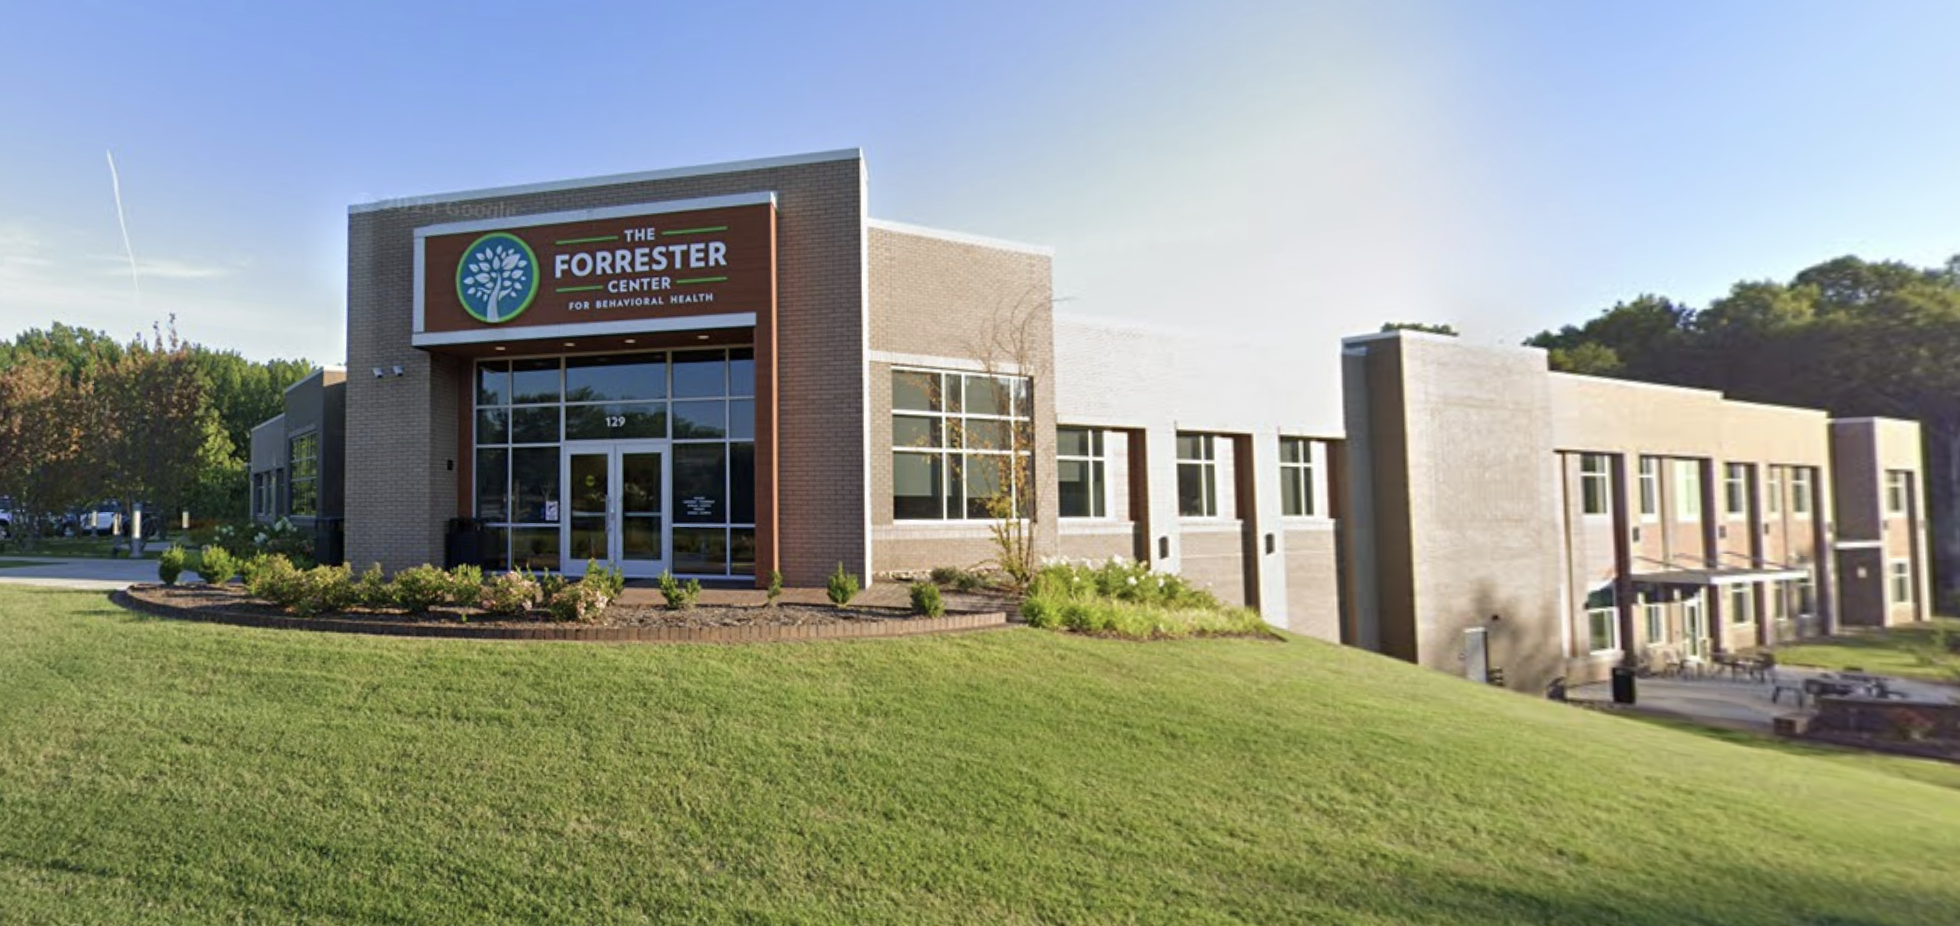 The Forrester Center for Behavioral Health